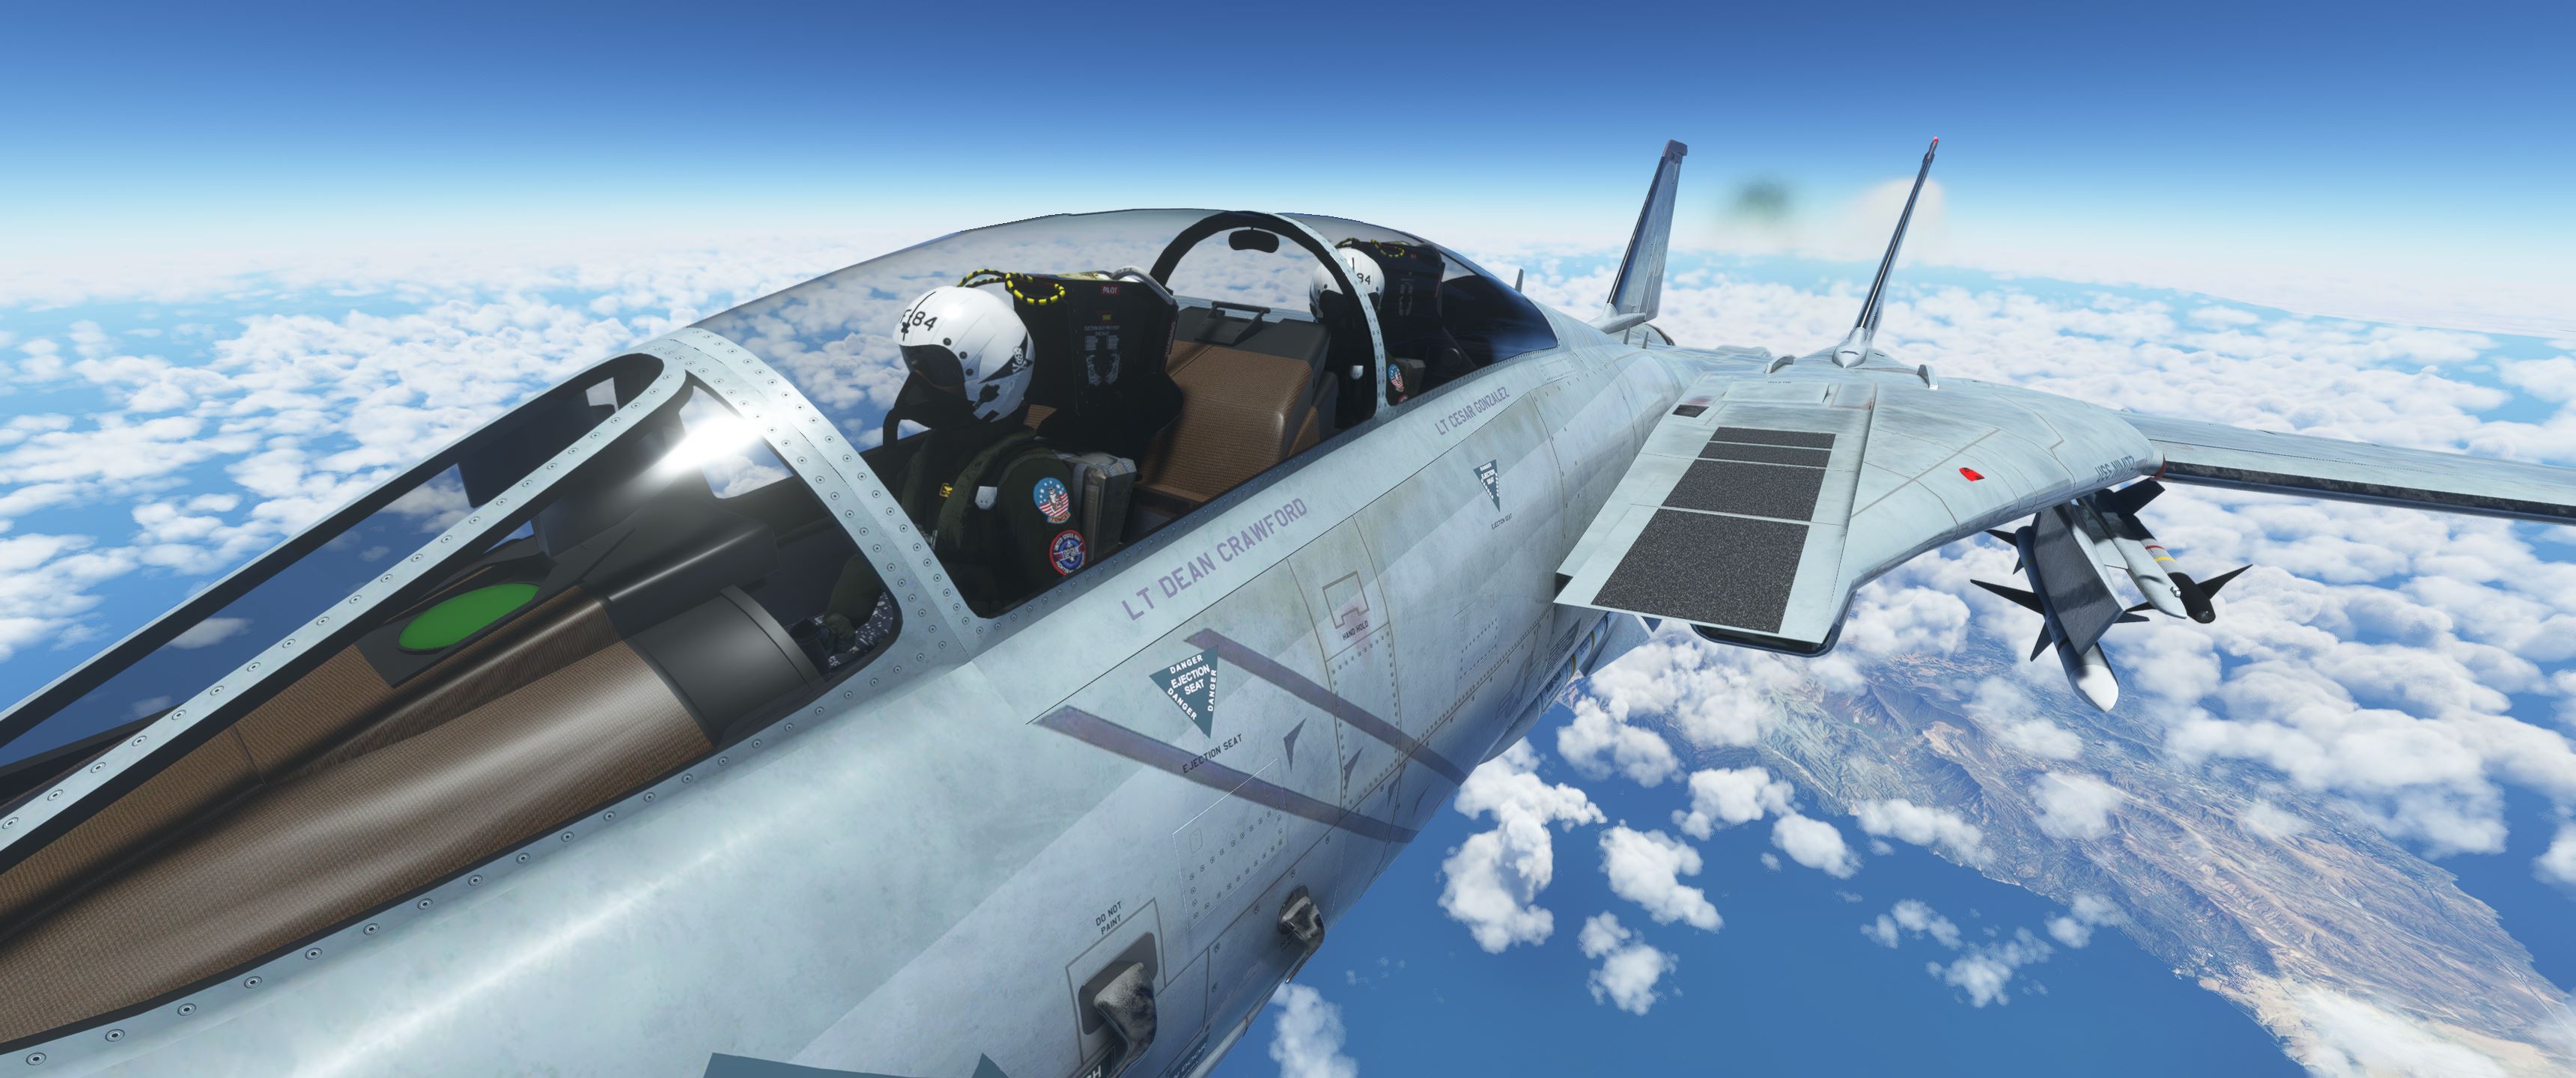 2022-07-01 15_26_12-Microsoft Flight Simulator - 1.26.5.0.jpg